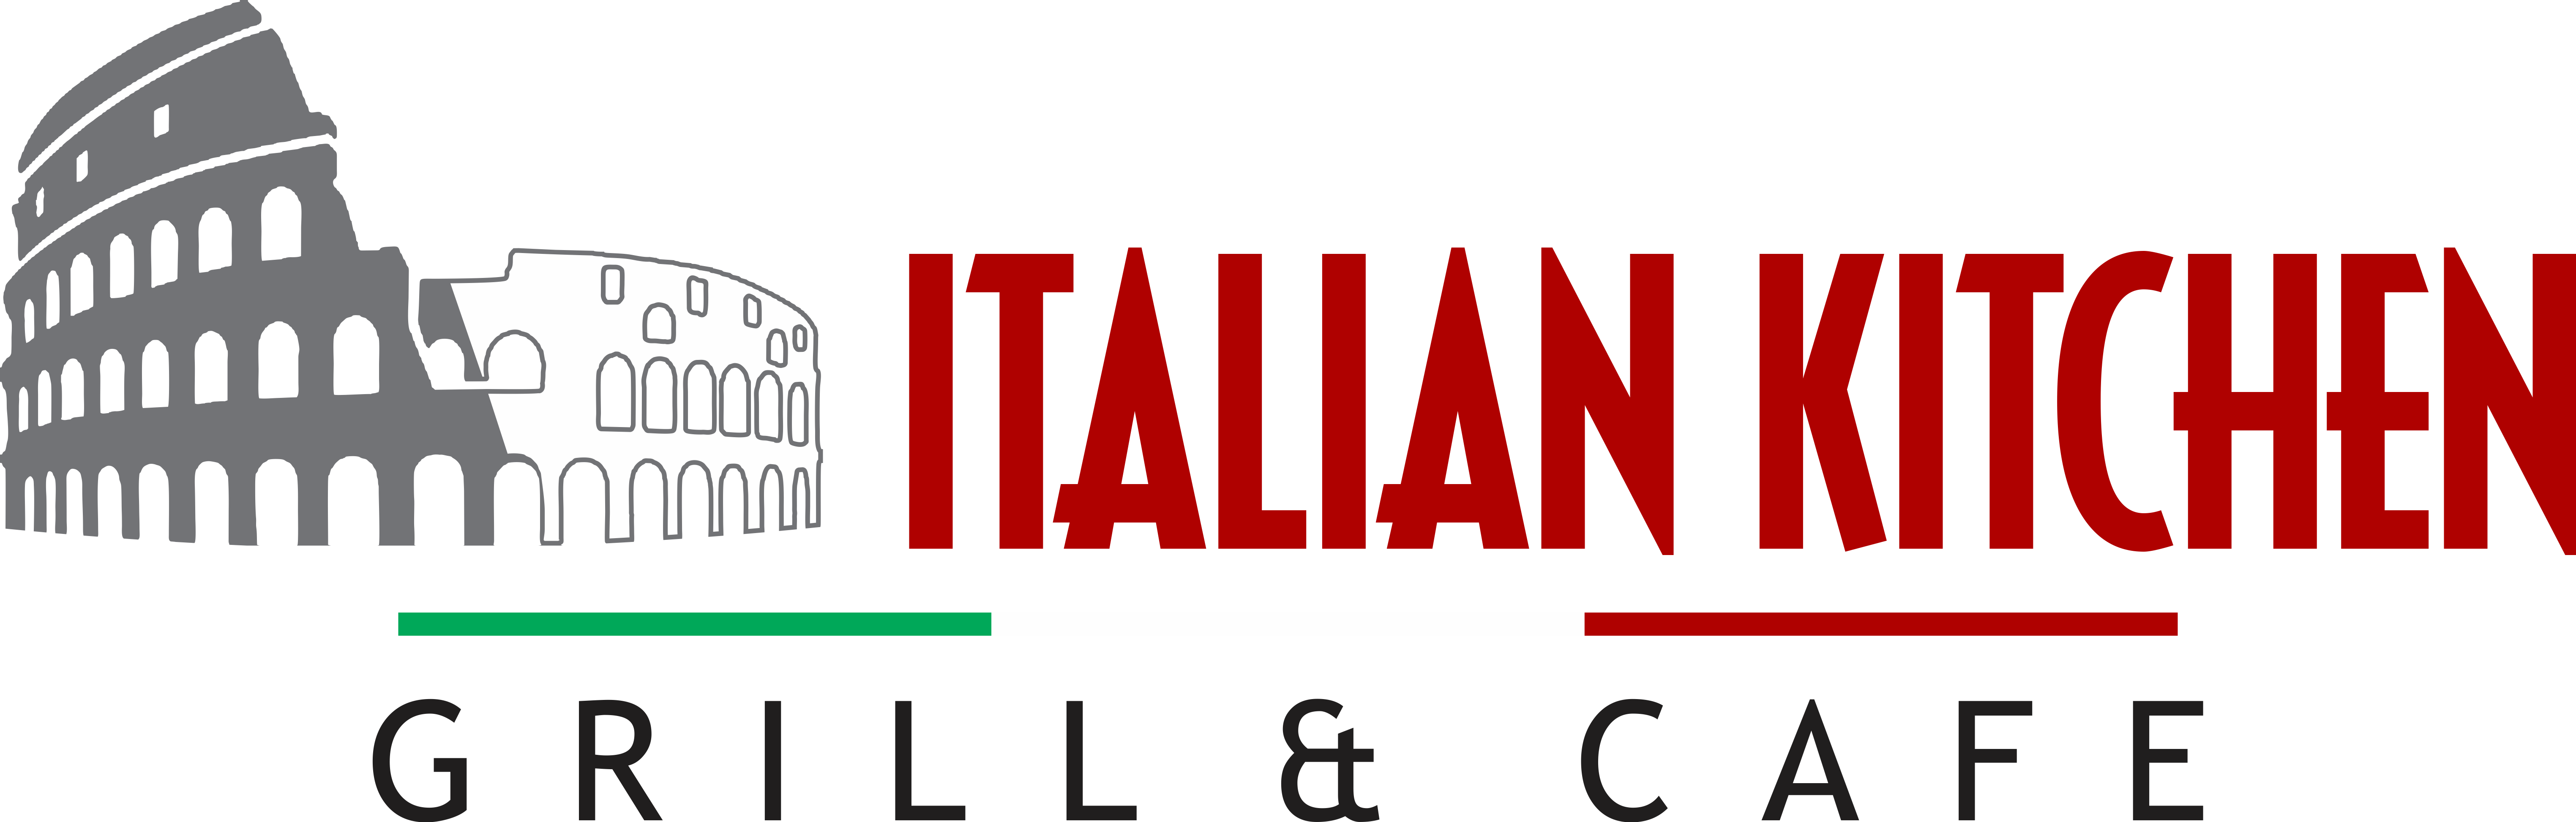 Italian Kitchen Grill & Cafe